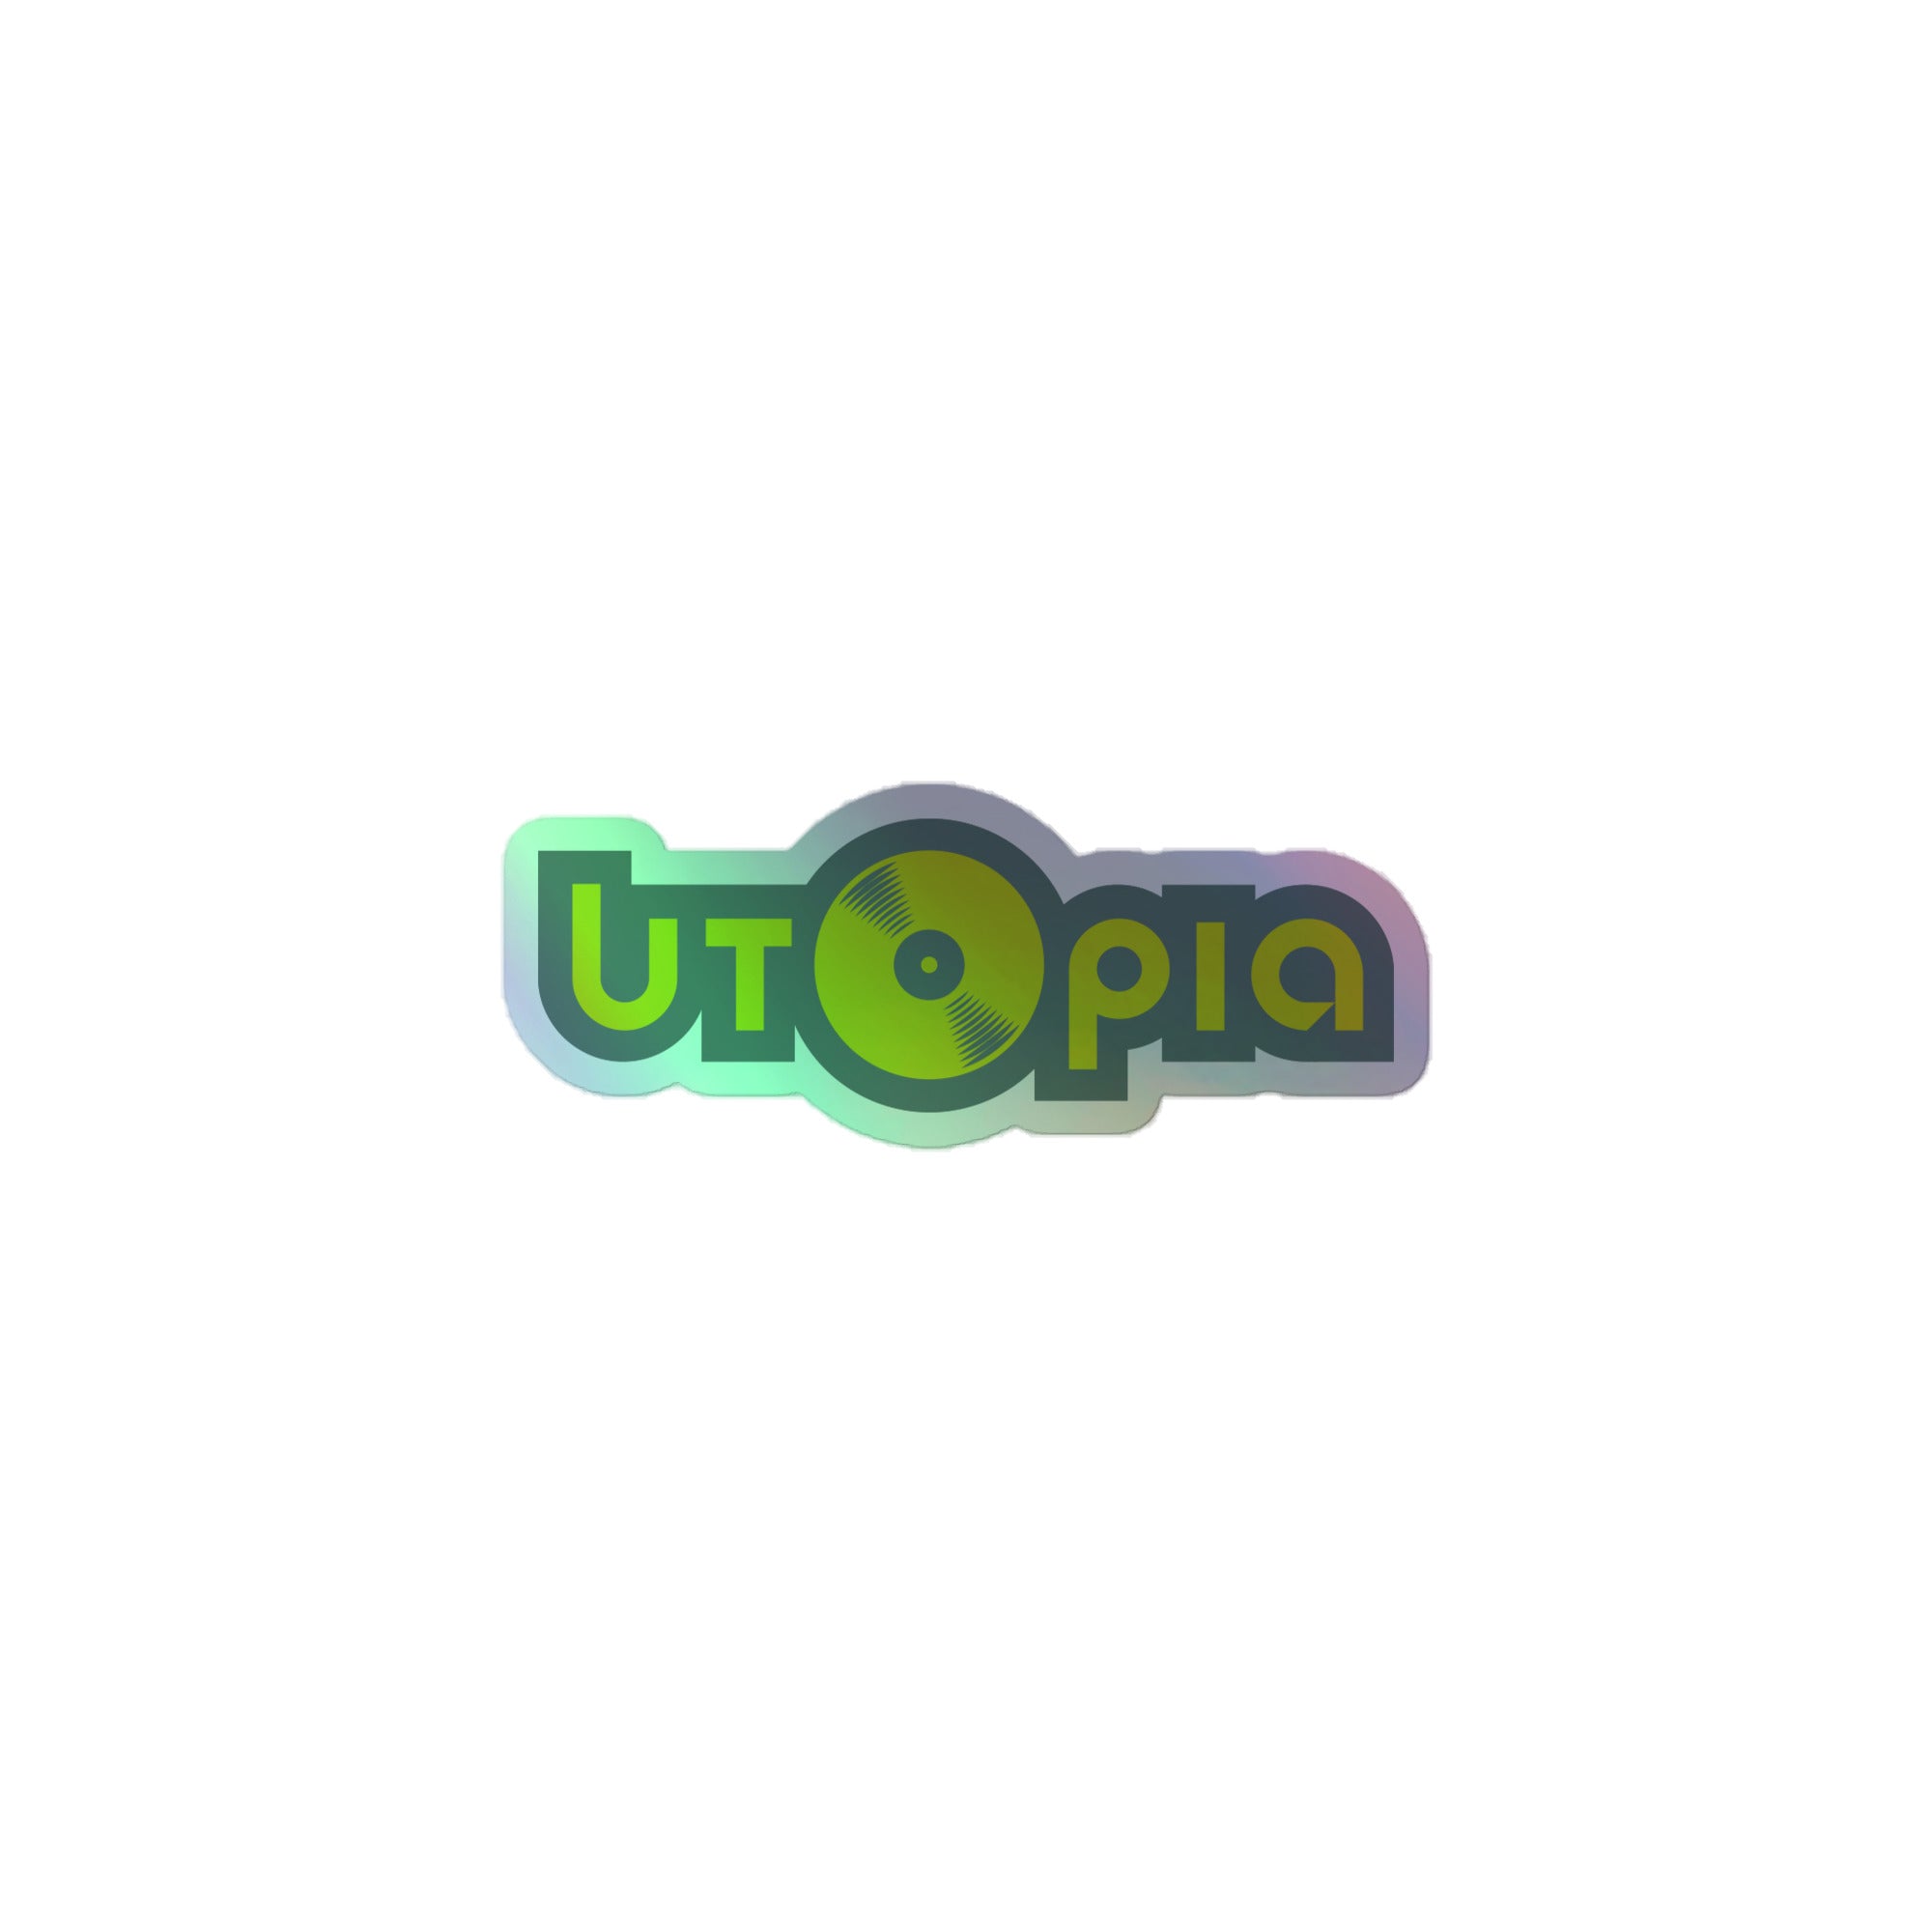 Utopia: Holographic Sticker